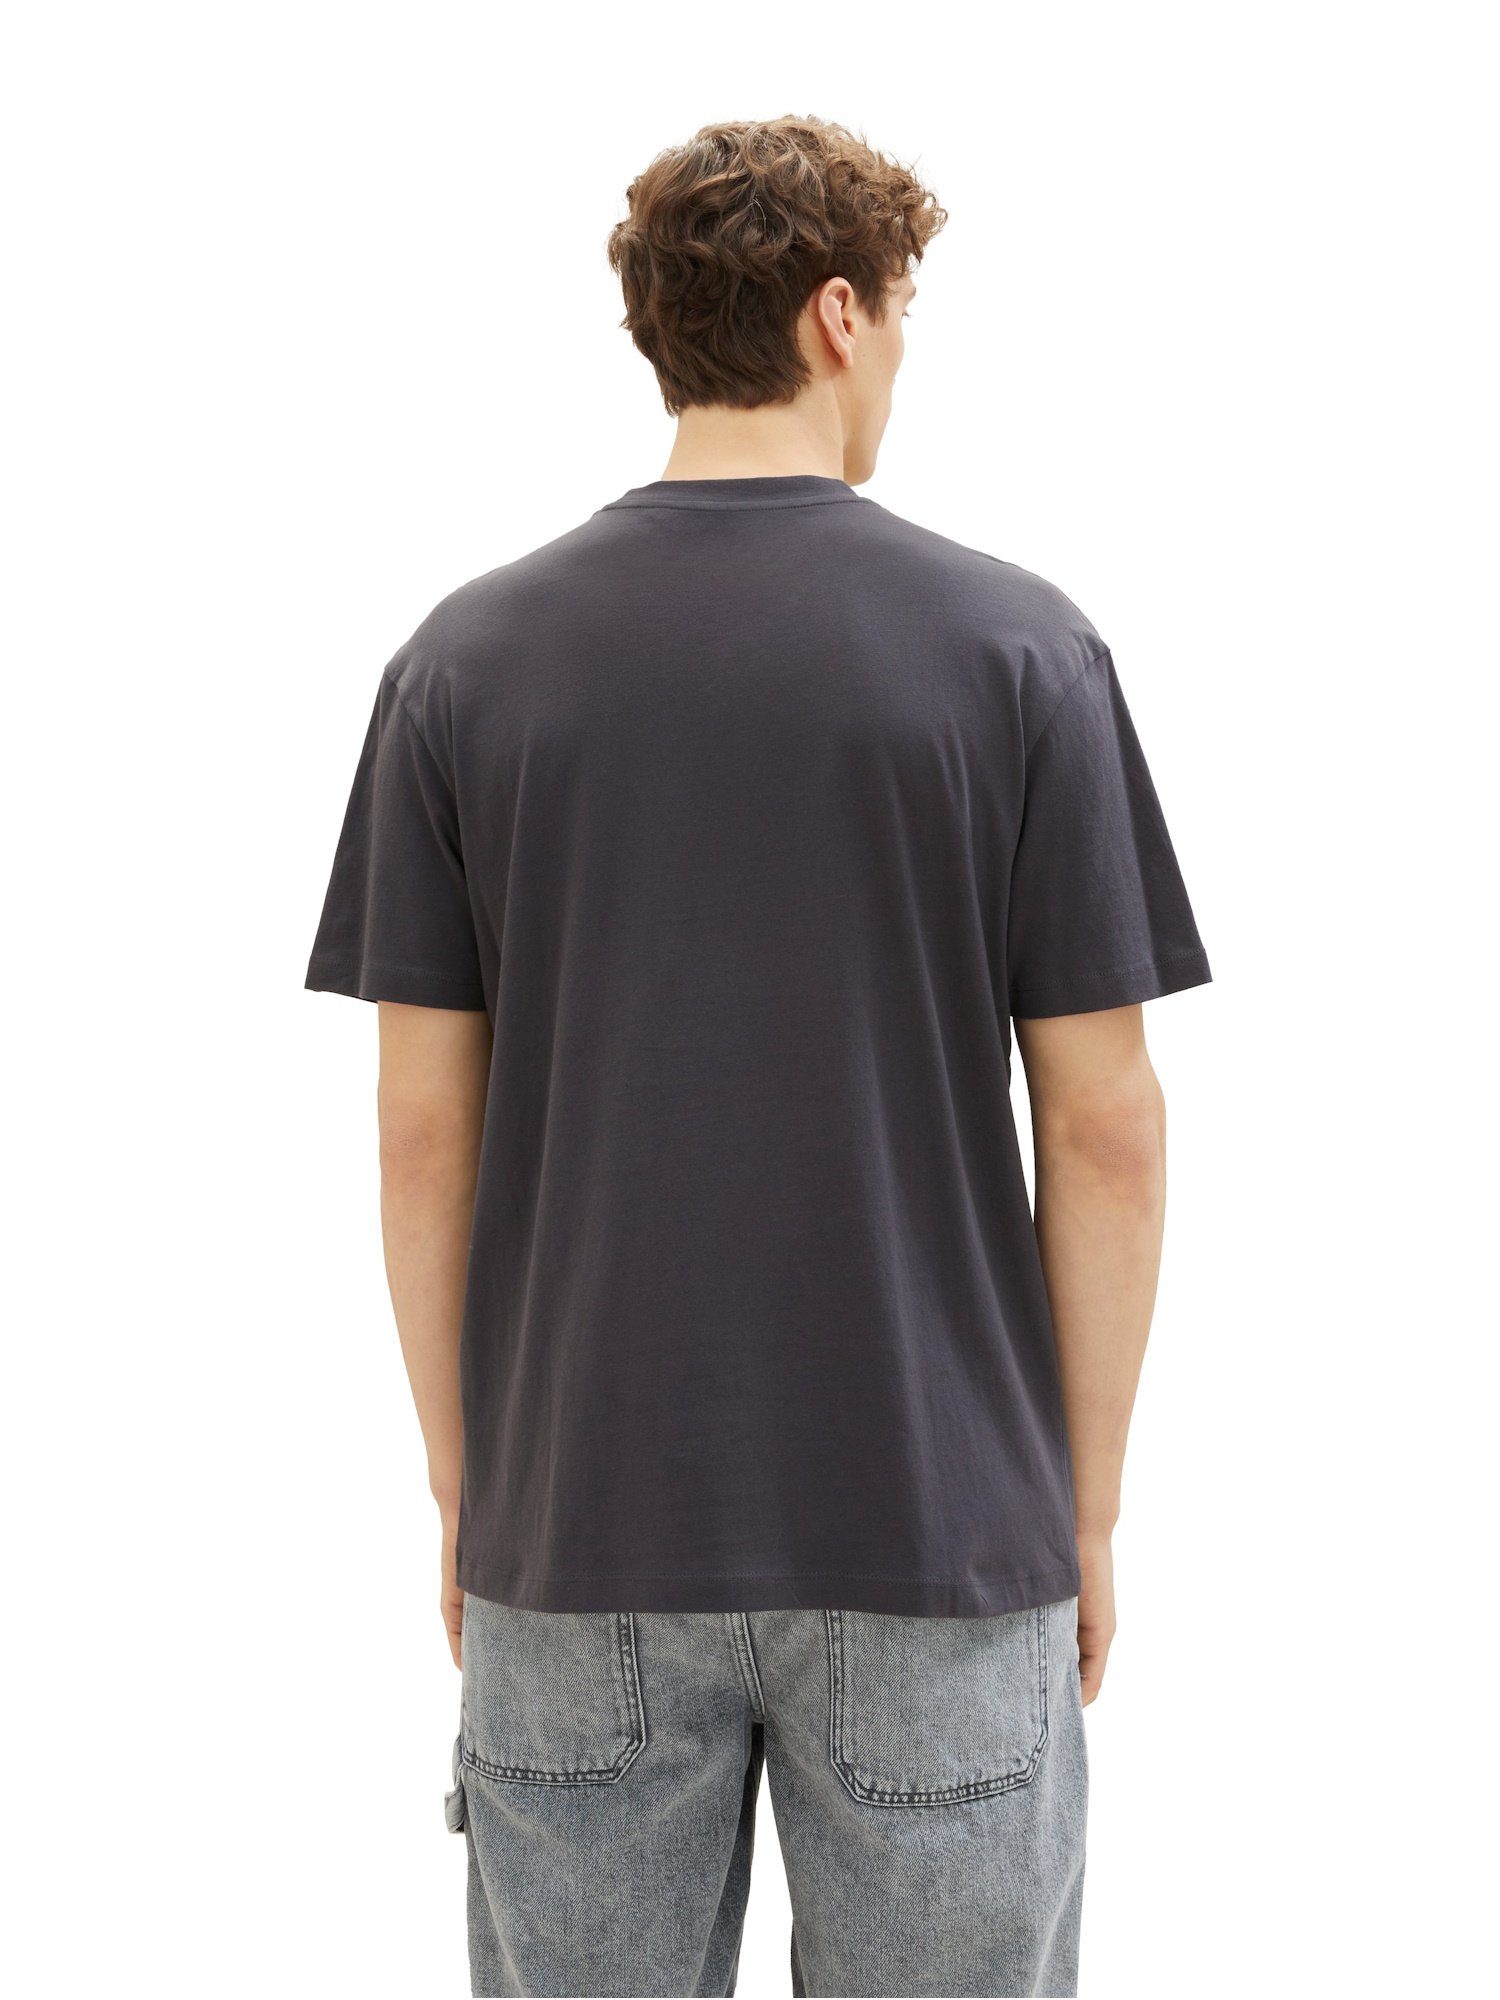 TOM TAILOR Denim TOM TAILOR mit Kurzarmshirt T-Shirt Rundhalsausschnitt grau und (1-tlg) T-Shirt